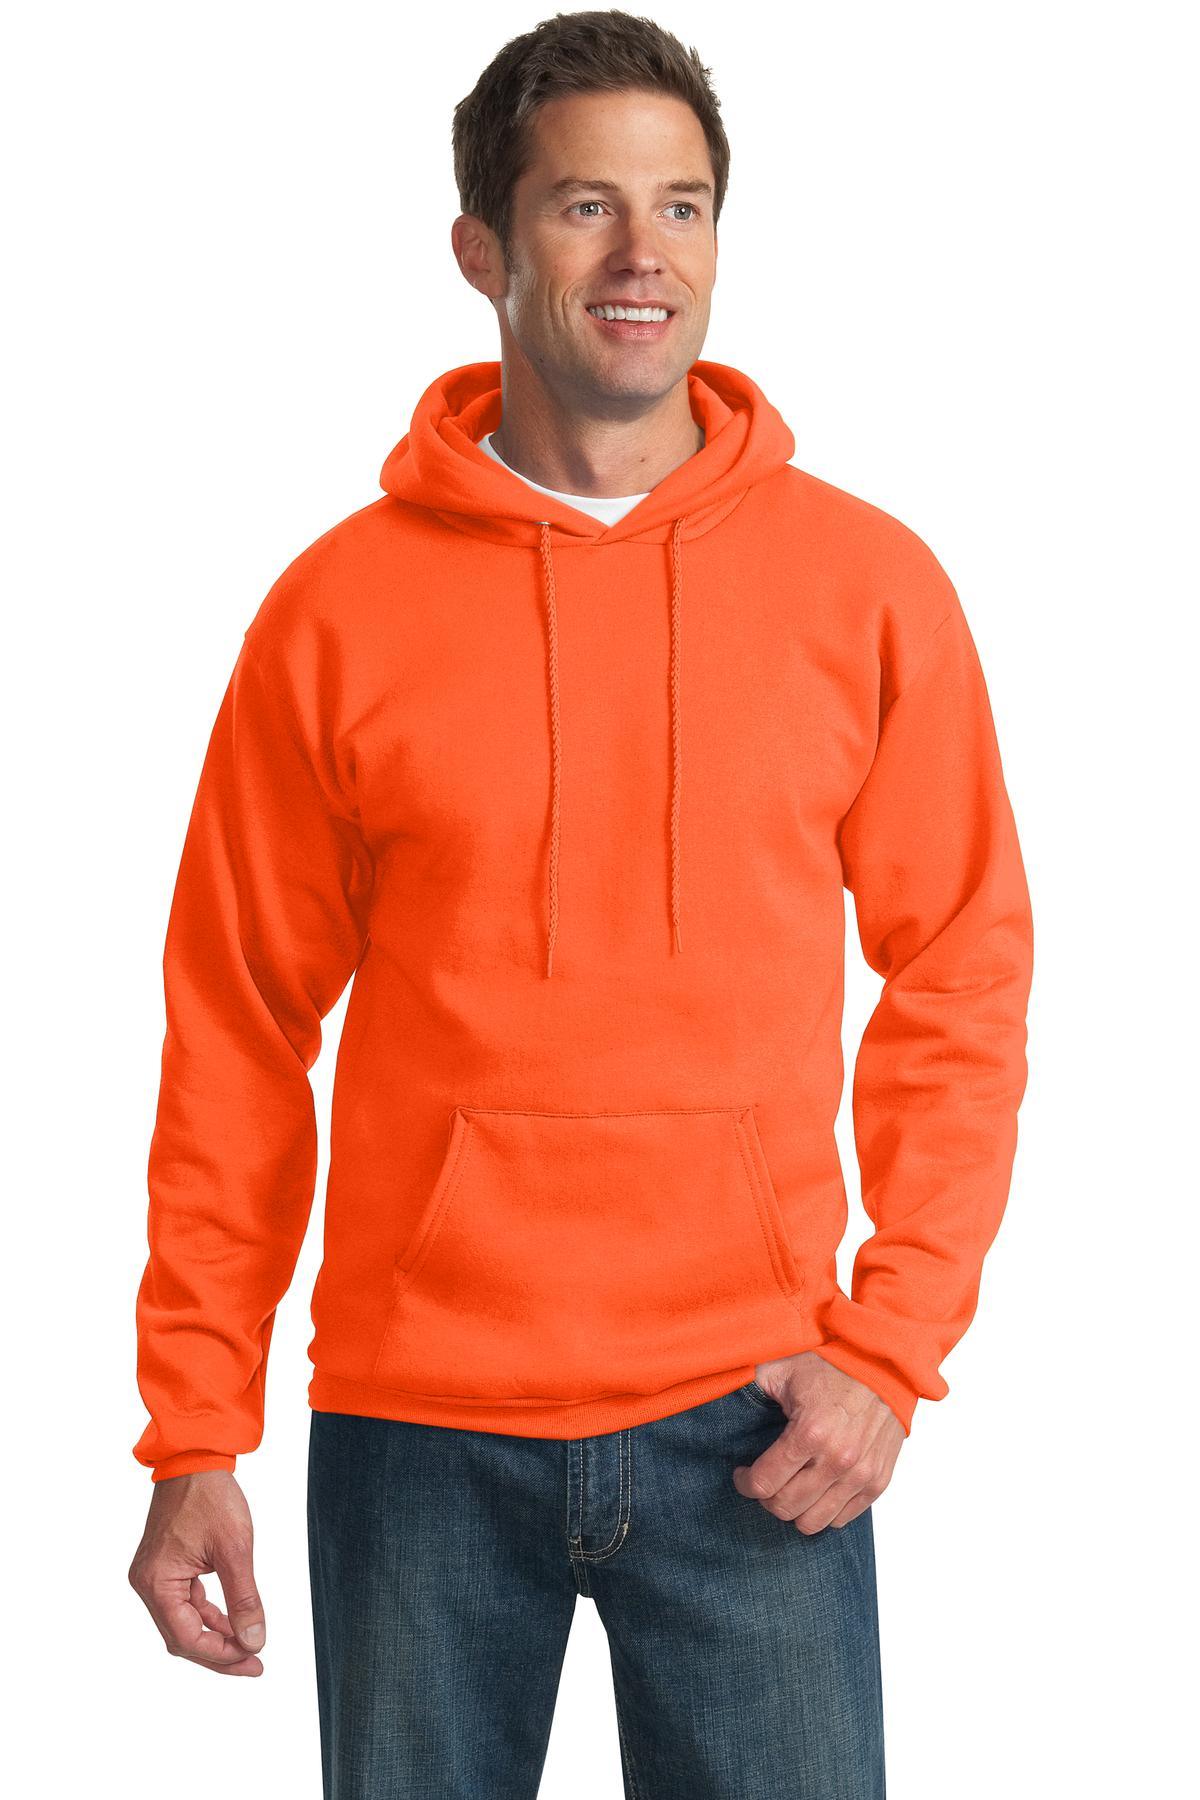 Port & Company Tall Essential Fleece Pullover Hooded Sweatshirt. PC90HT - Dresses Max